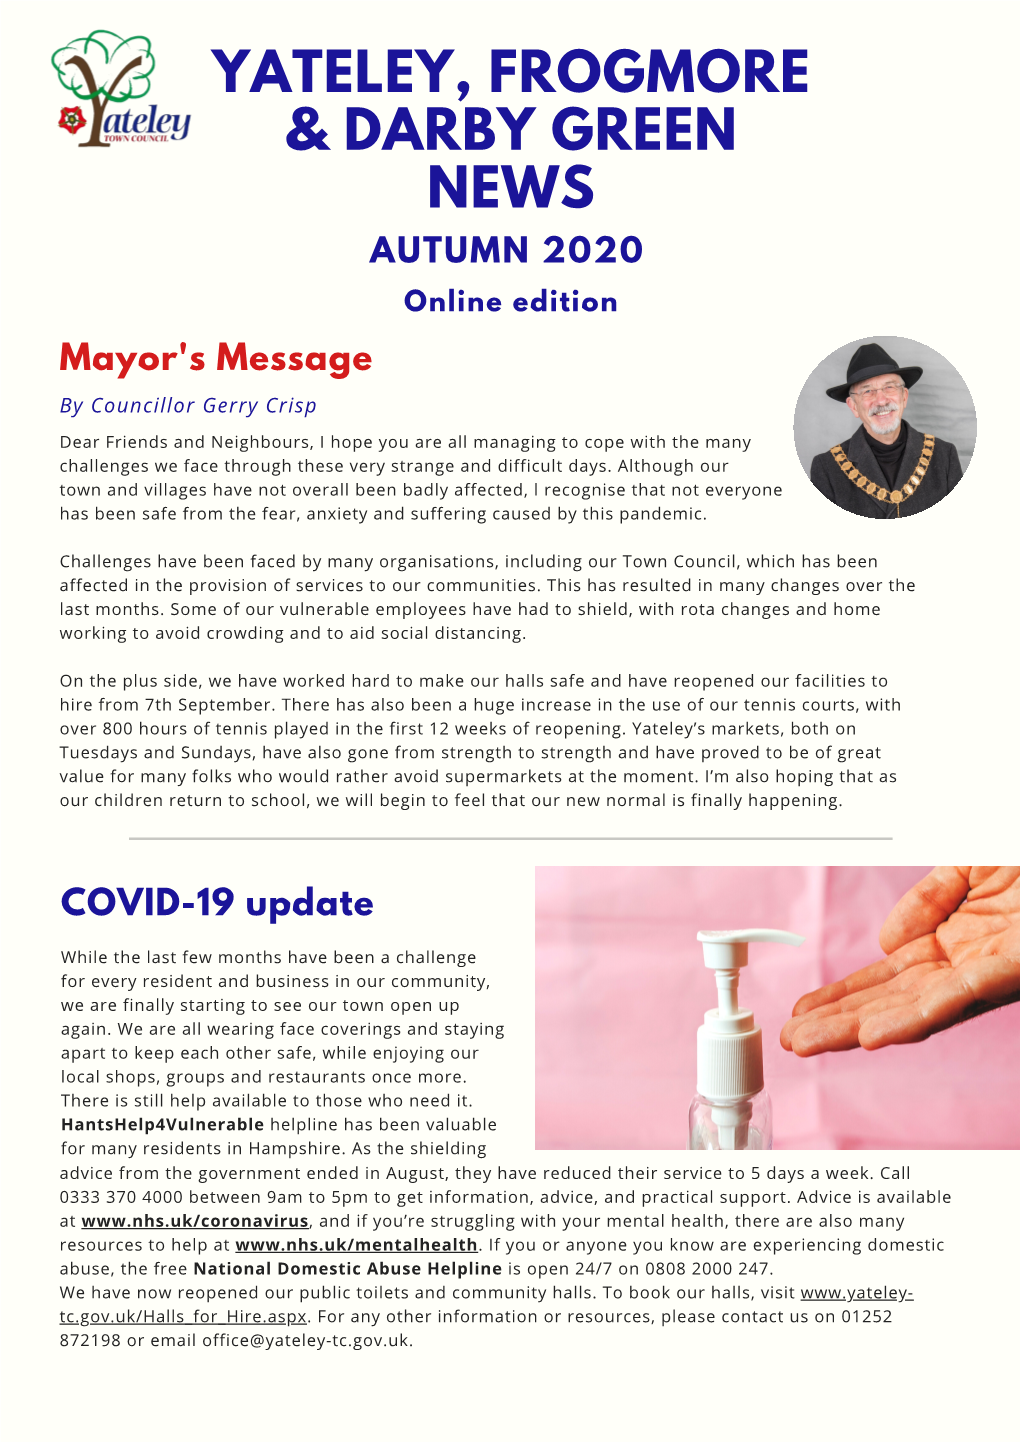 AUTUMN 2020 Online Edition Mayor's Message by Councillor Gerry Crisp